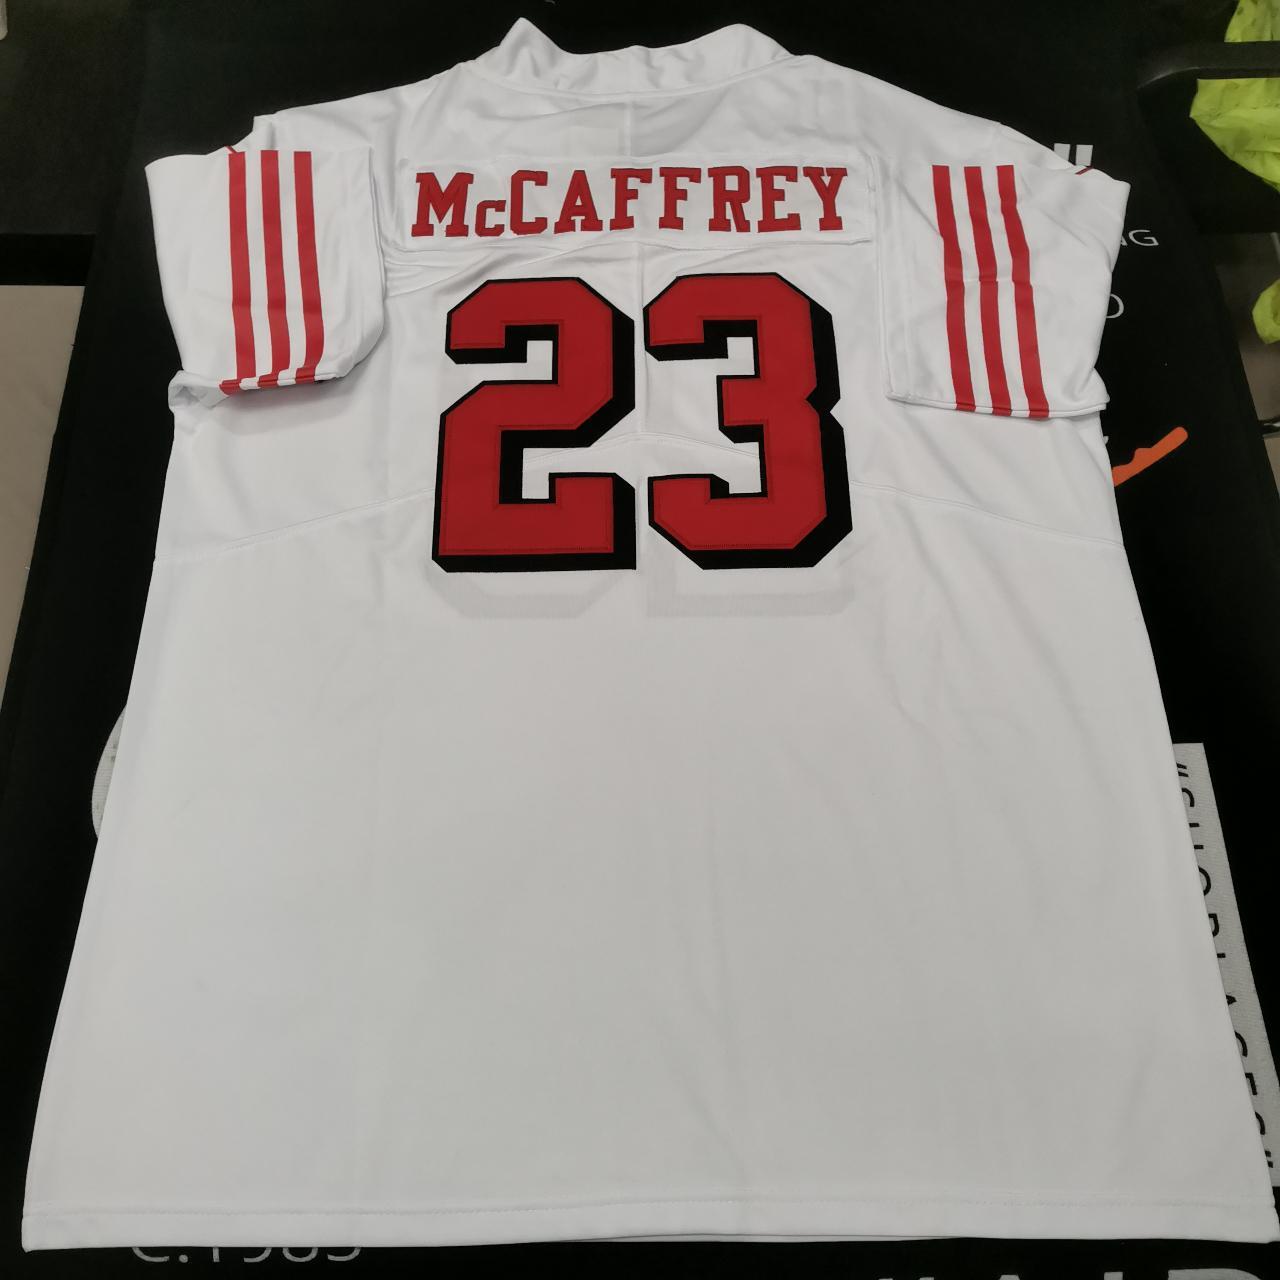 men's mccaffrey jersey